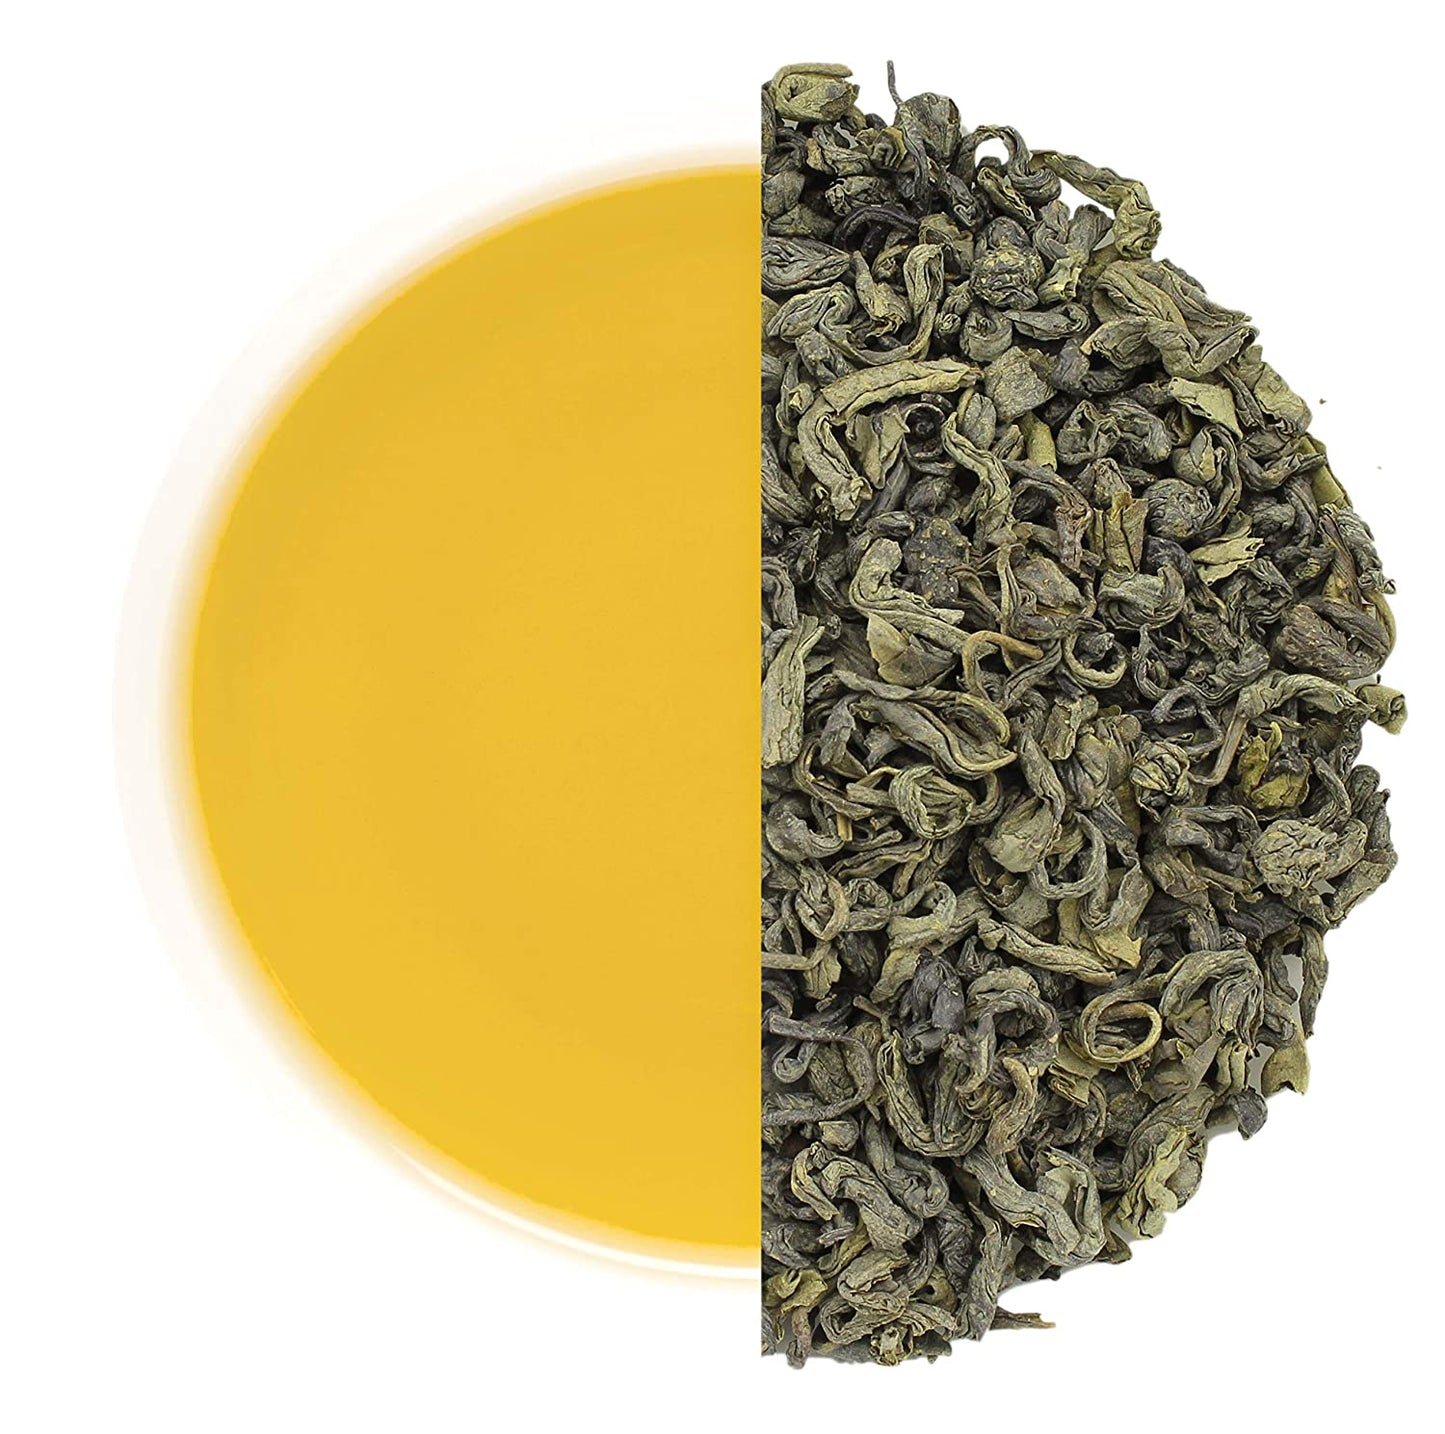 Chinese Young Hyson Loose Leaf Green Tea (8oz Bulk Bag)